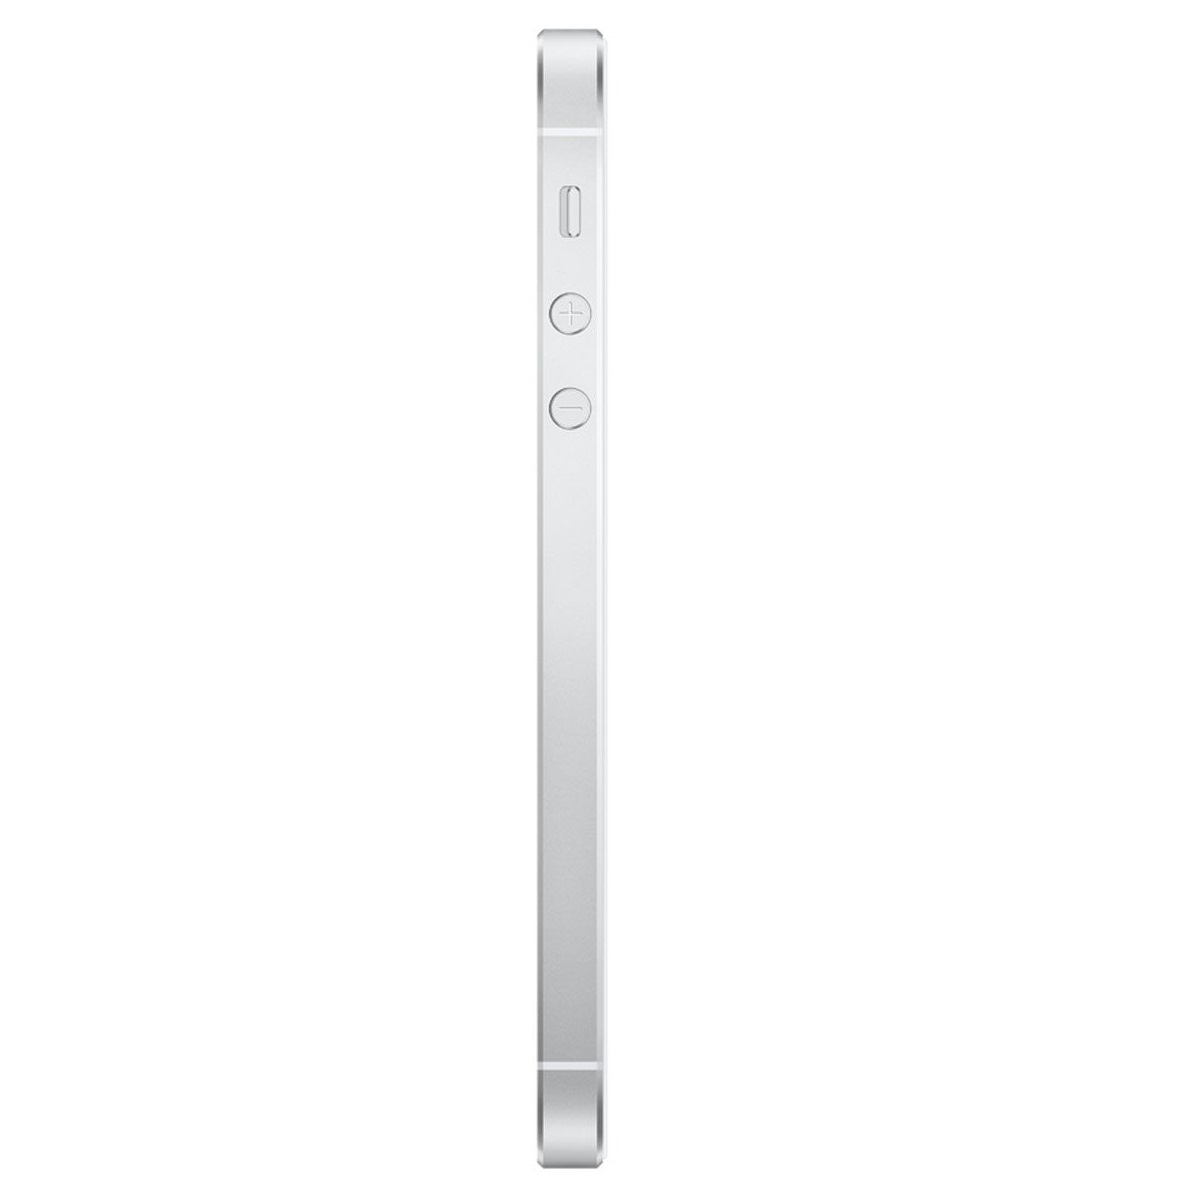 Смартфон Apple iPhone SE 128Gb Silver (A1723)